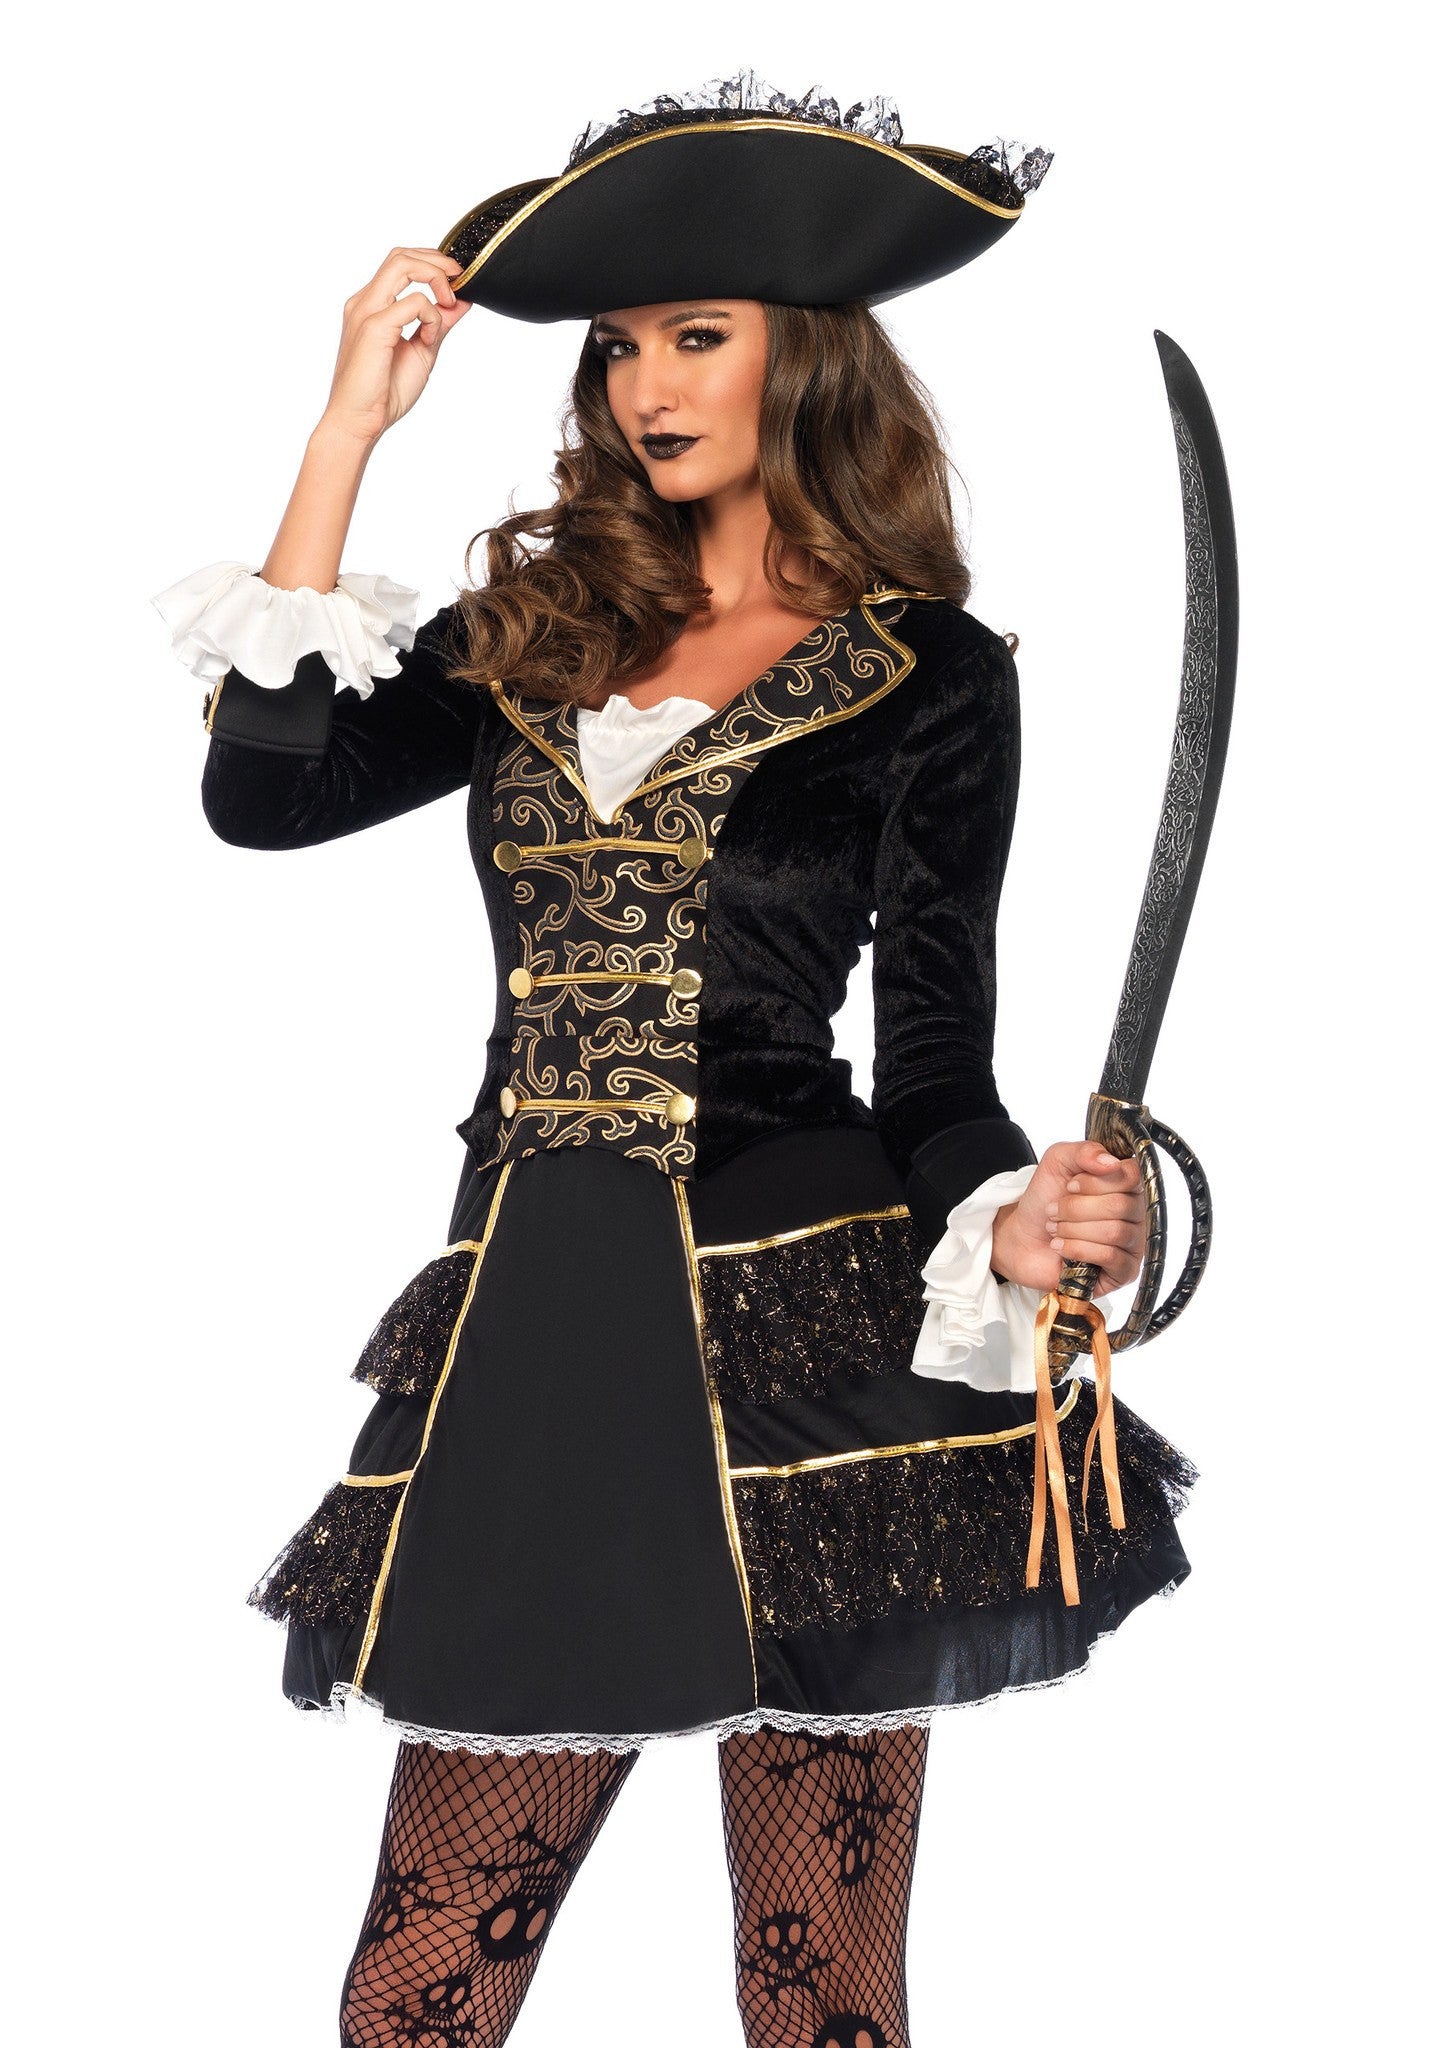 Costume - High Seas Pirate Captain